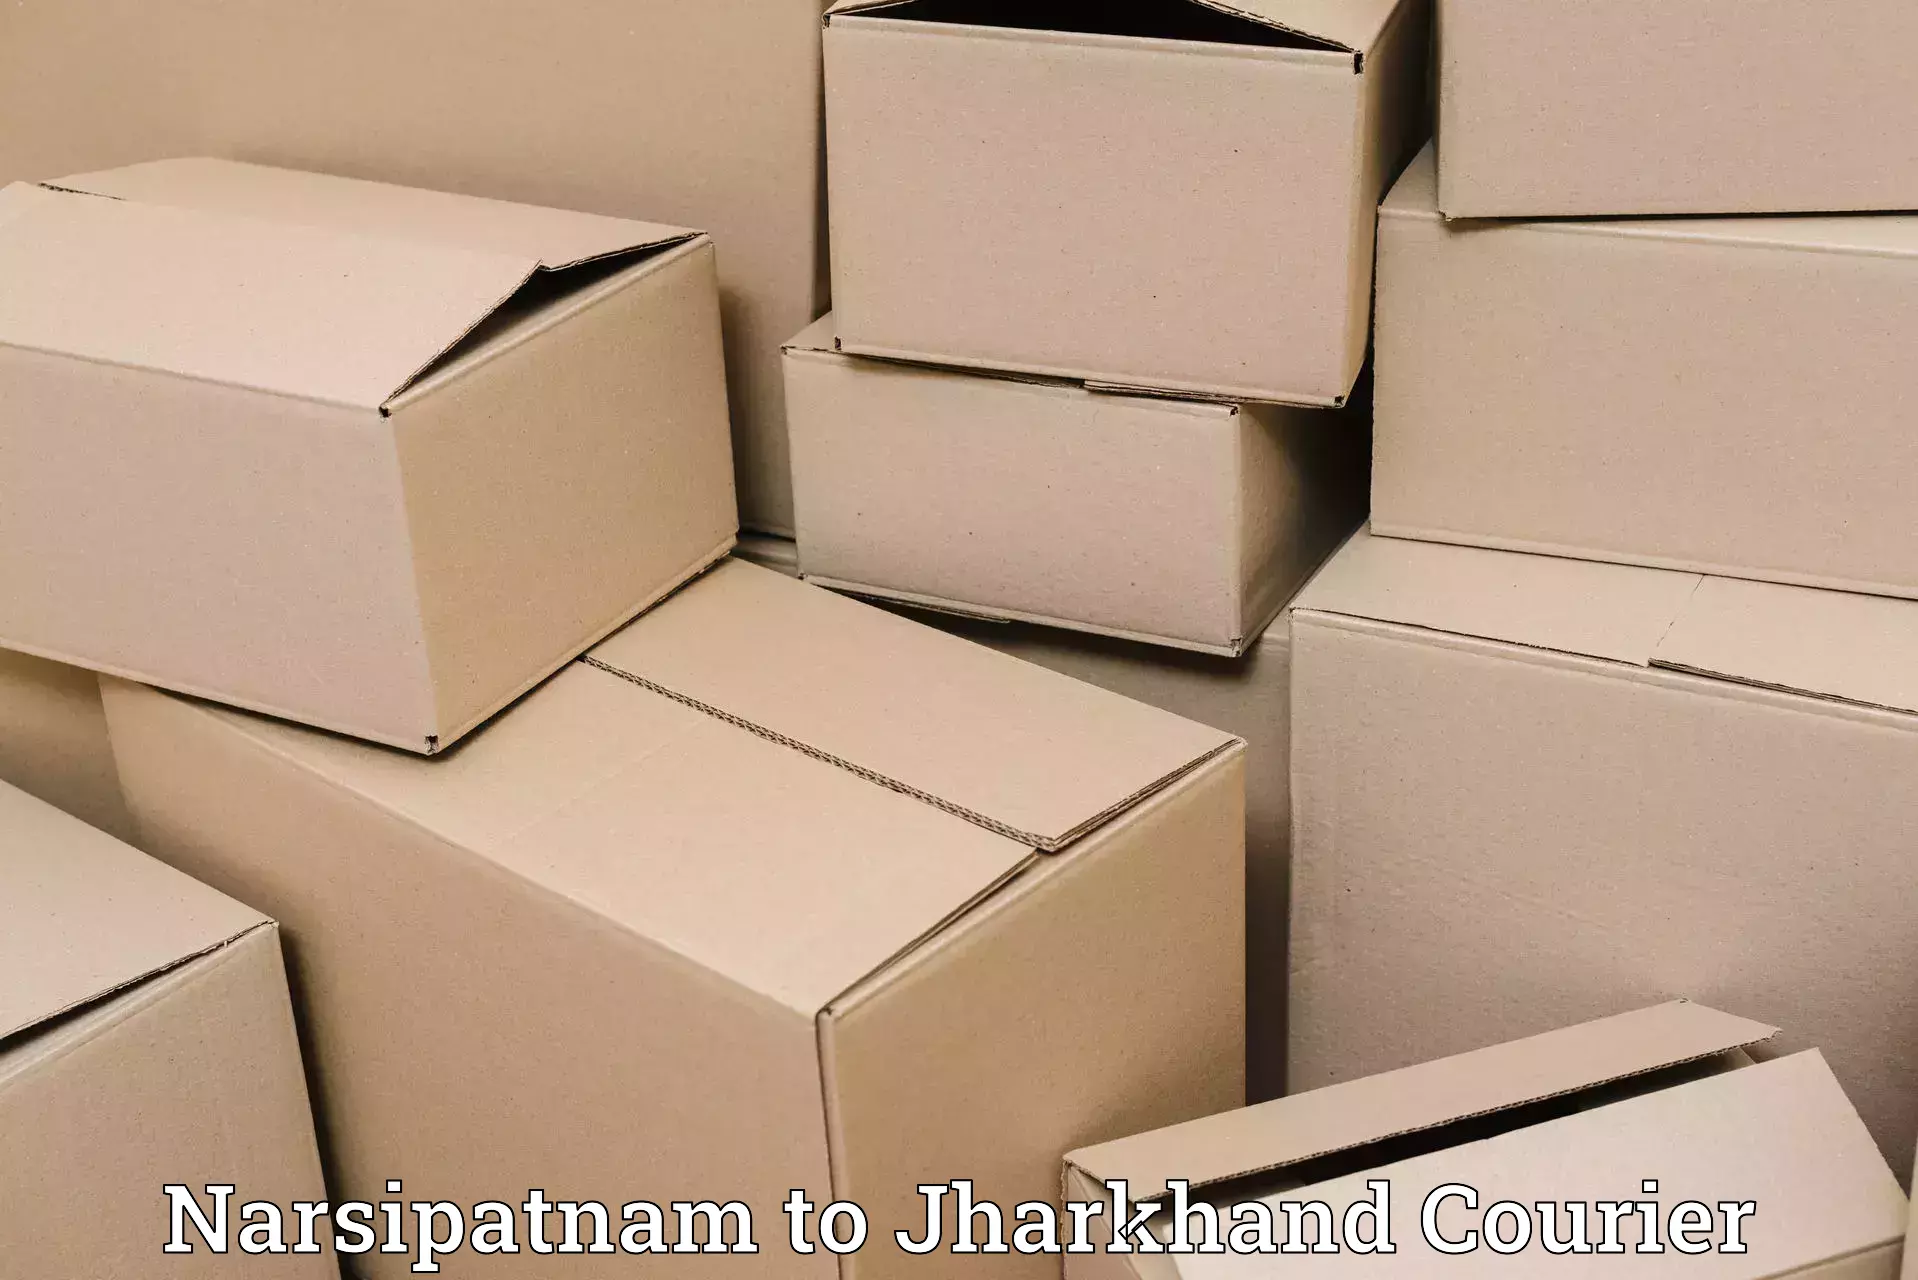 Courier service partnerships Narsipatnam to Chandil